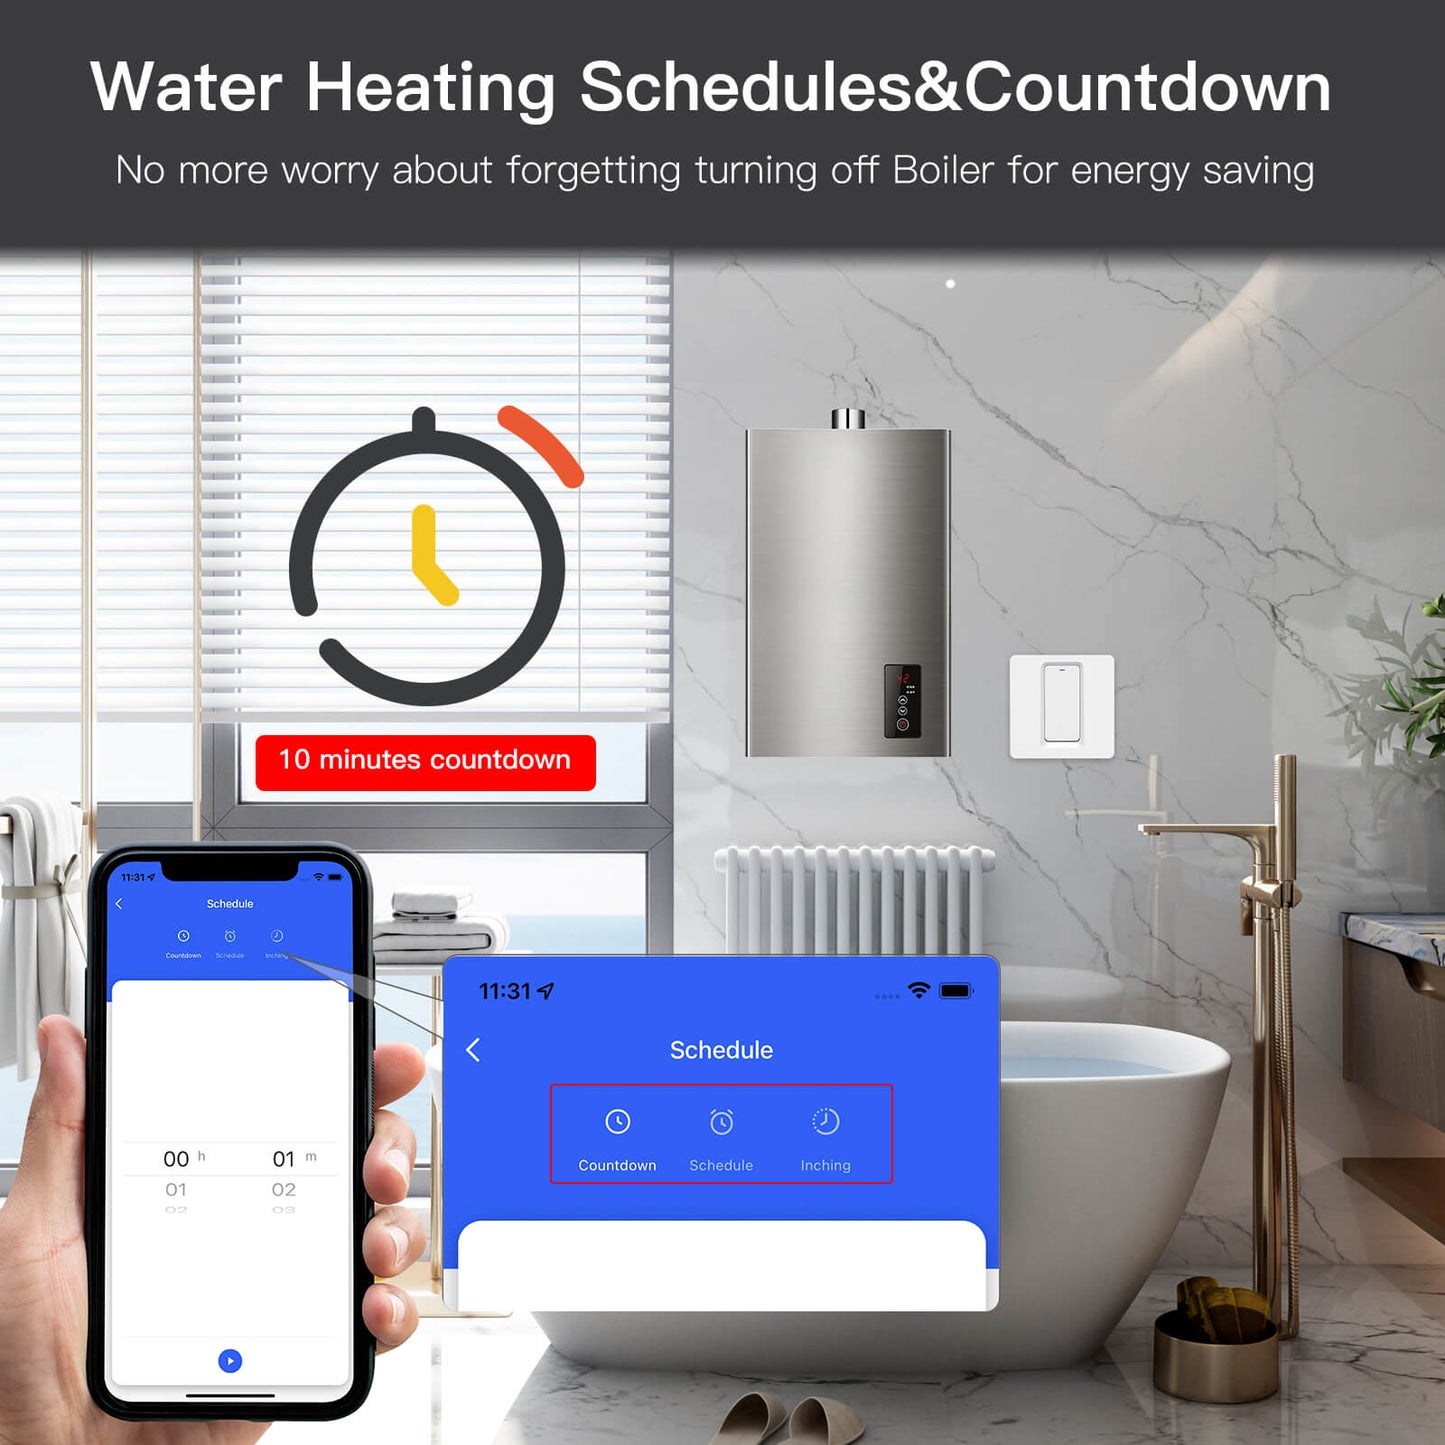 Water Heating Schedules & Countdown - MOES